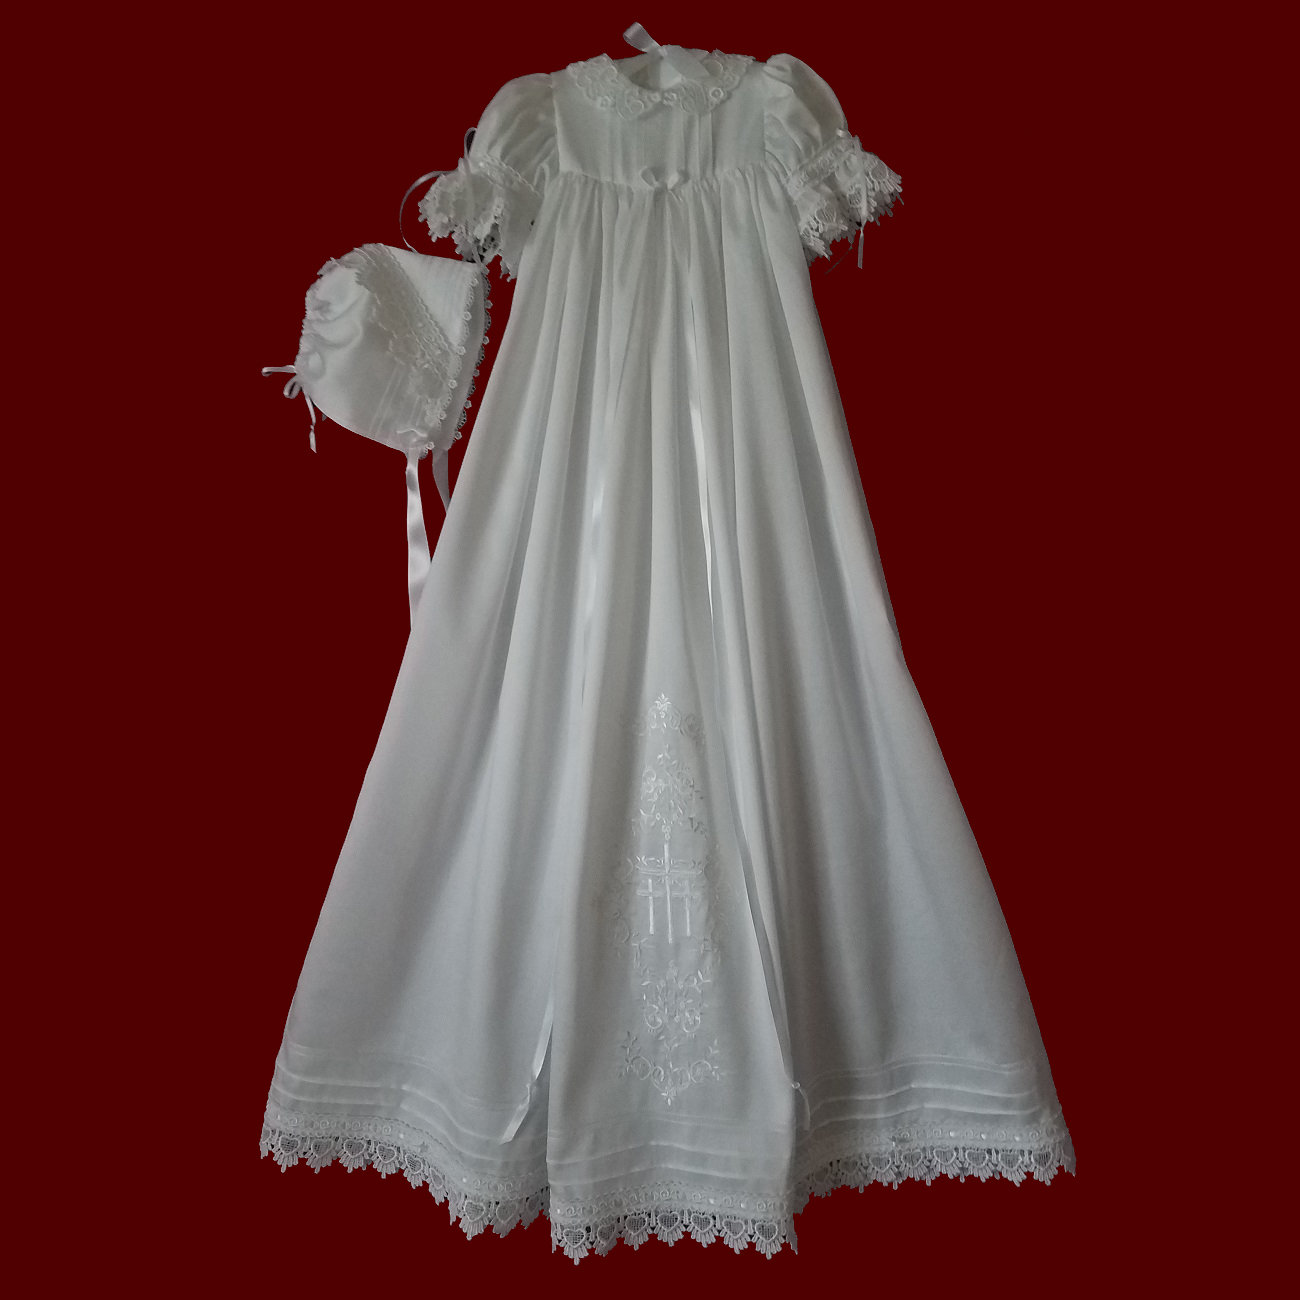 Satin Batiste Girls Christening Gown With Heart Venice Lace, Slip & Bonnet, Size 3-6 Months